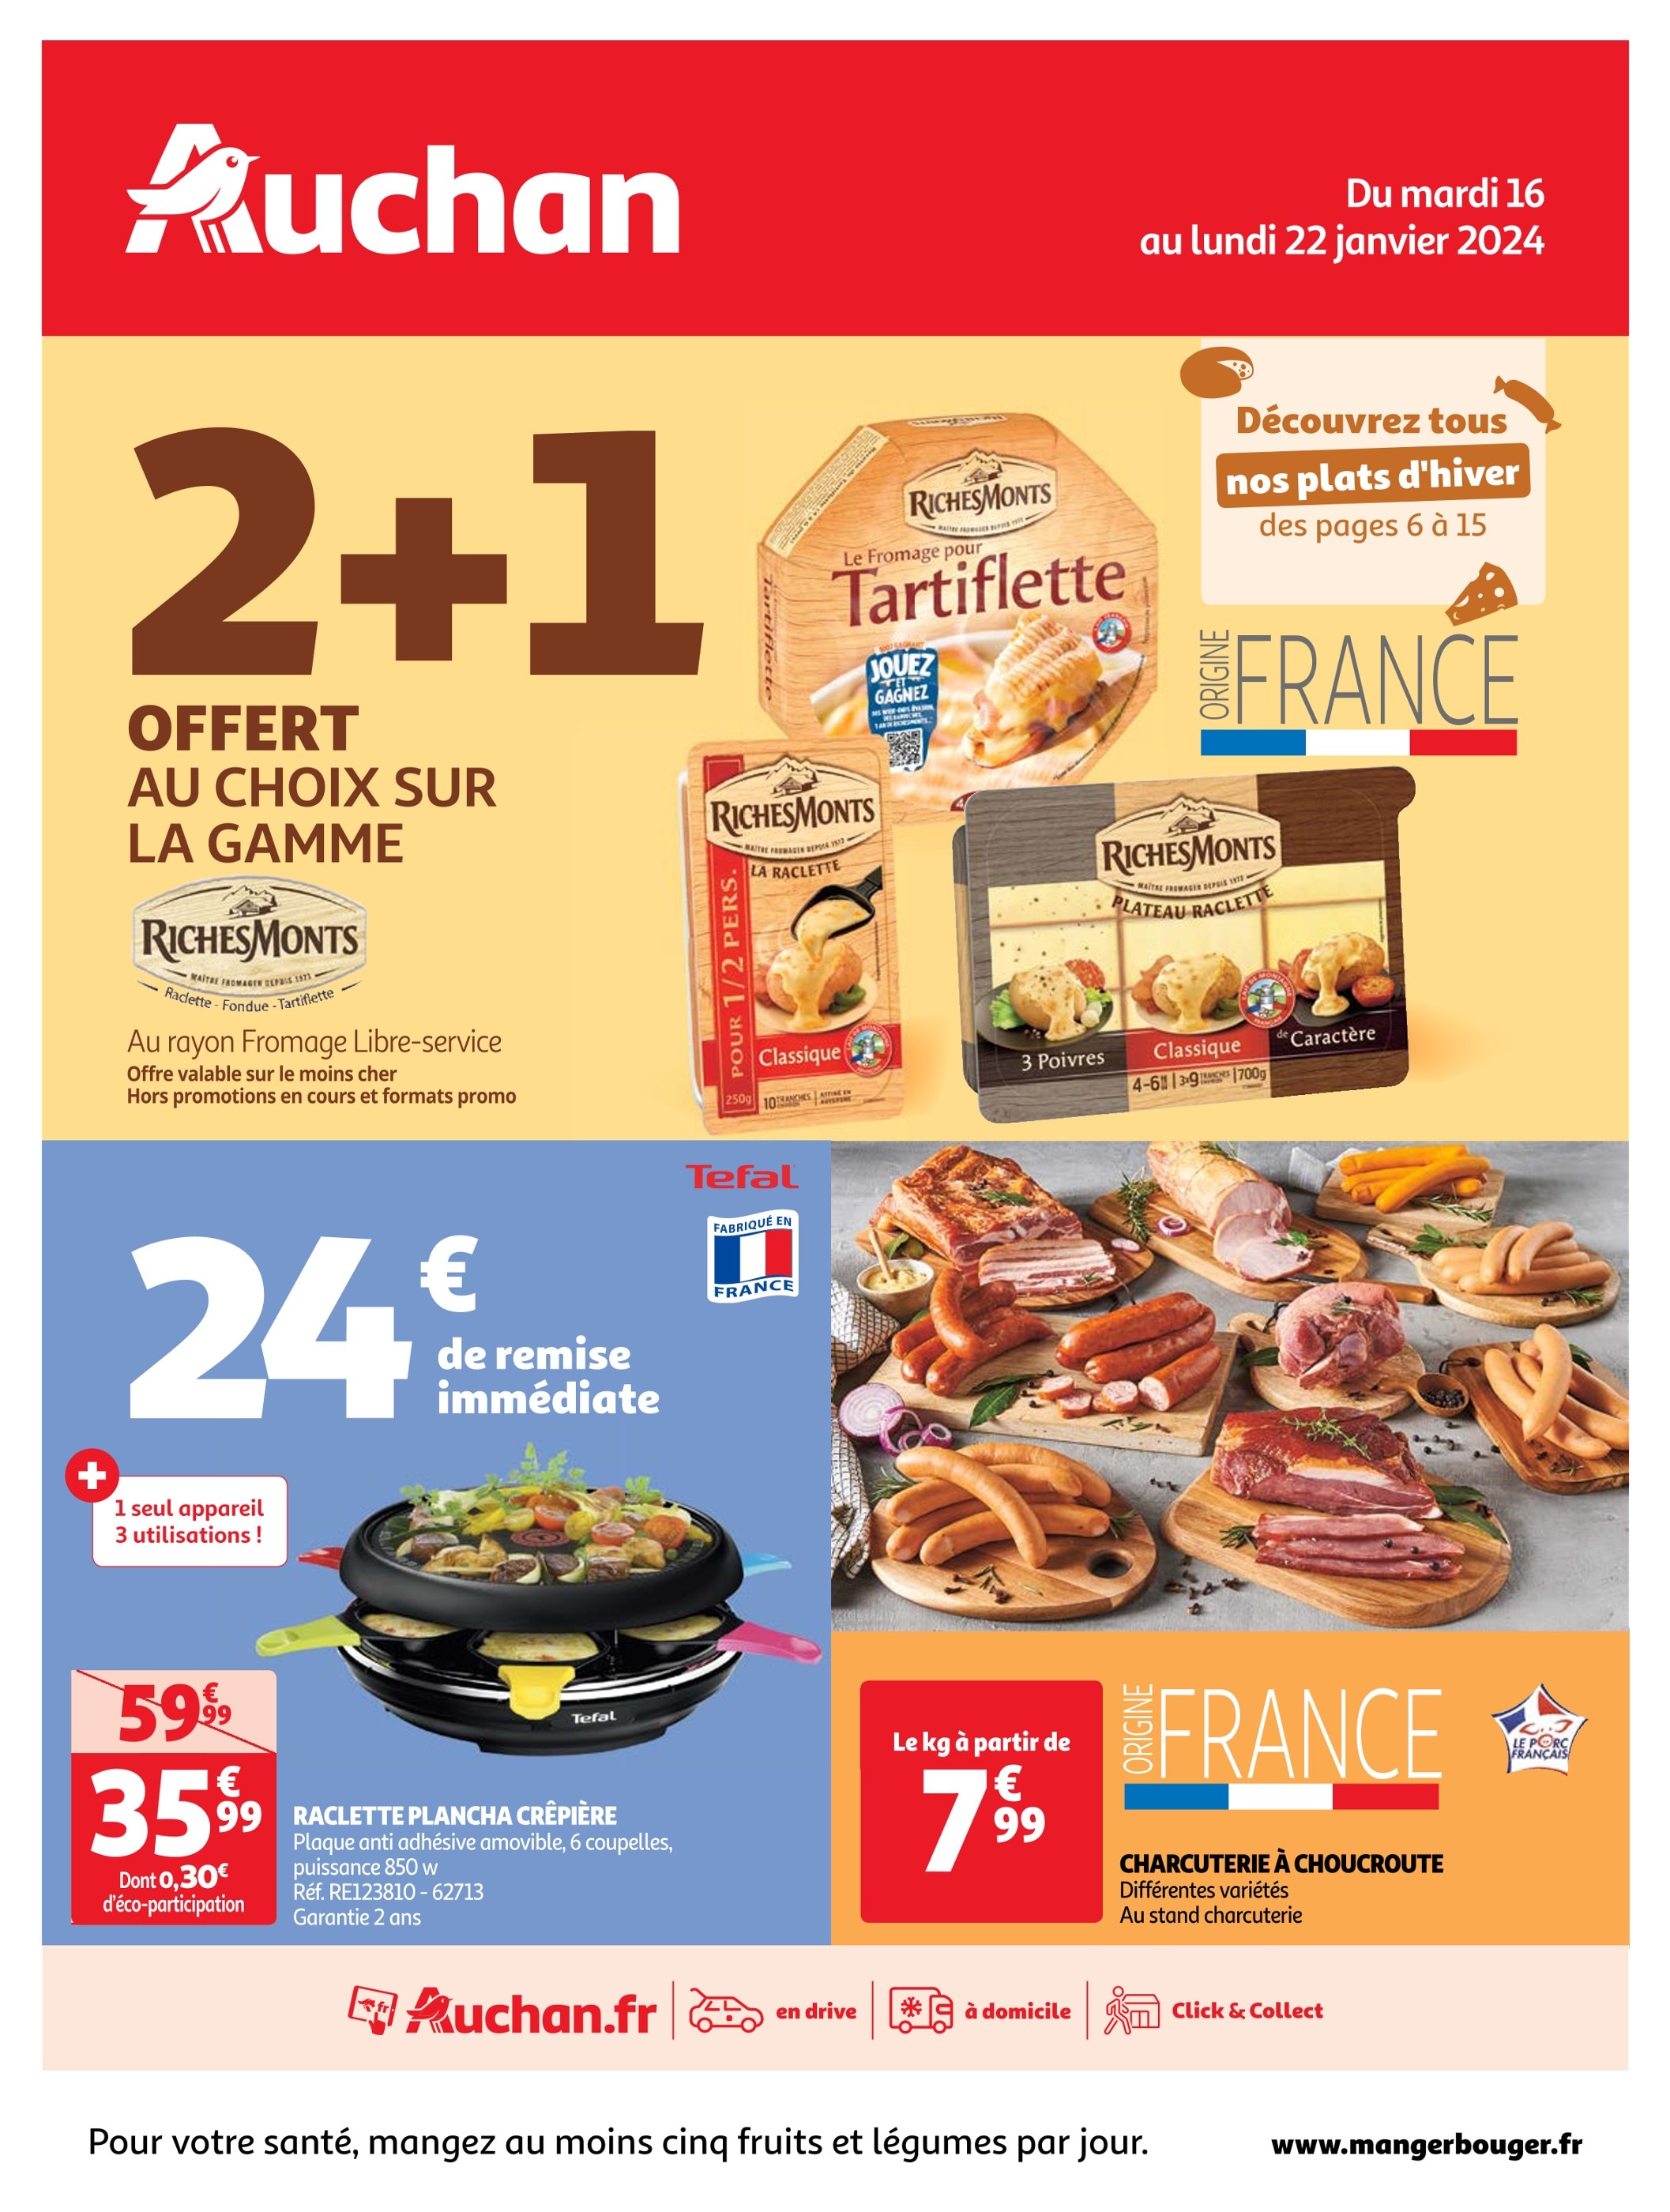 Auchan : Chocolats Milka Noël à -50% (moitié prix)